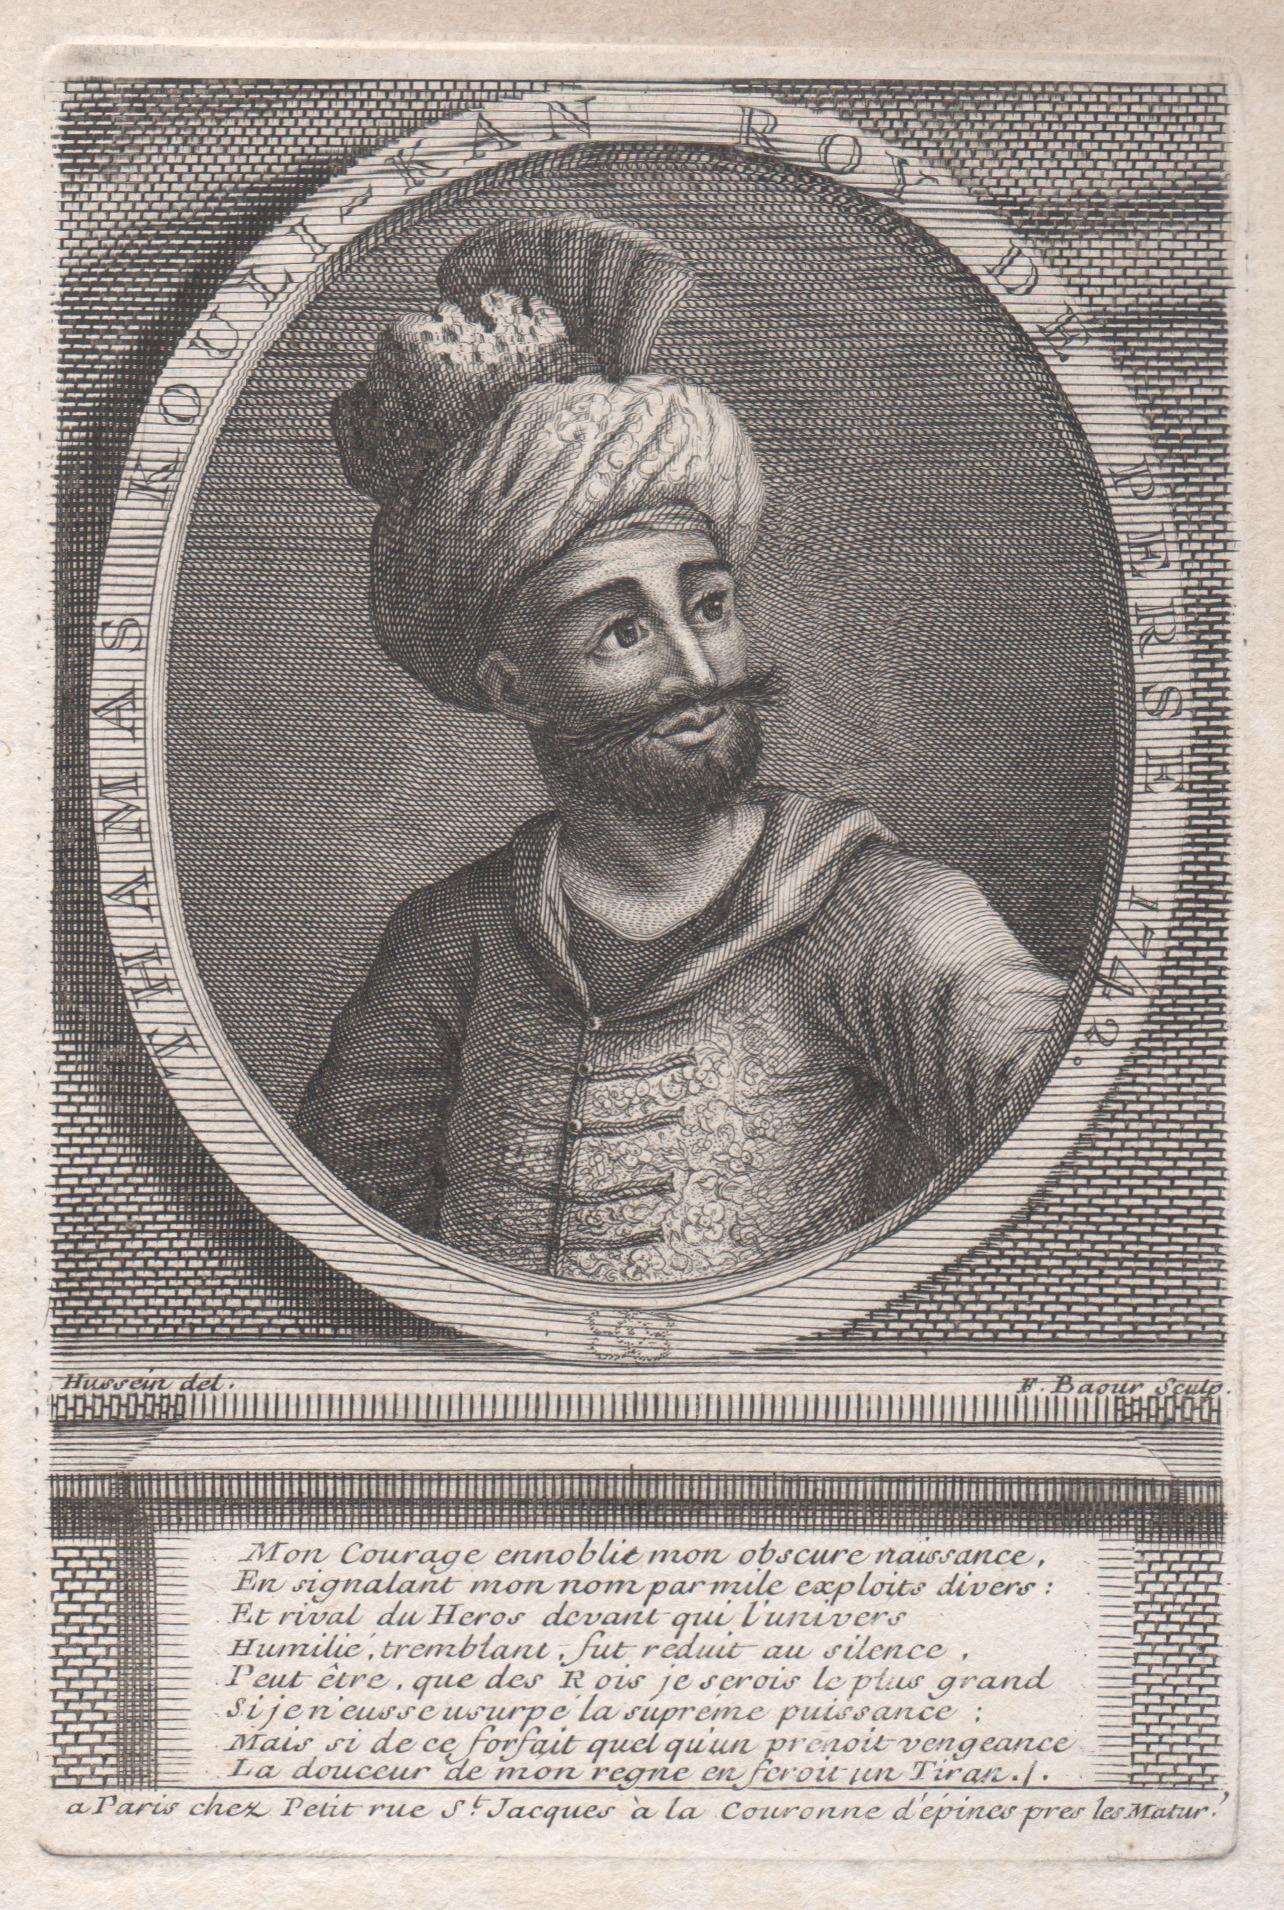 F Baour after Hussain Portrait Print – Thamas Kouli-Kan, Roy de Perse, 1742 (Nader Schah), Porträtstiche, 1742